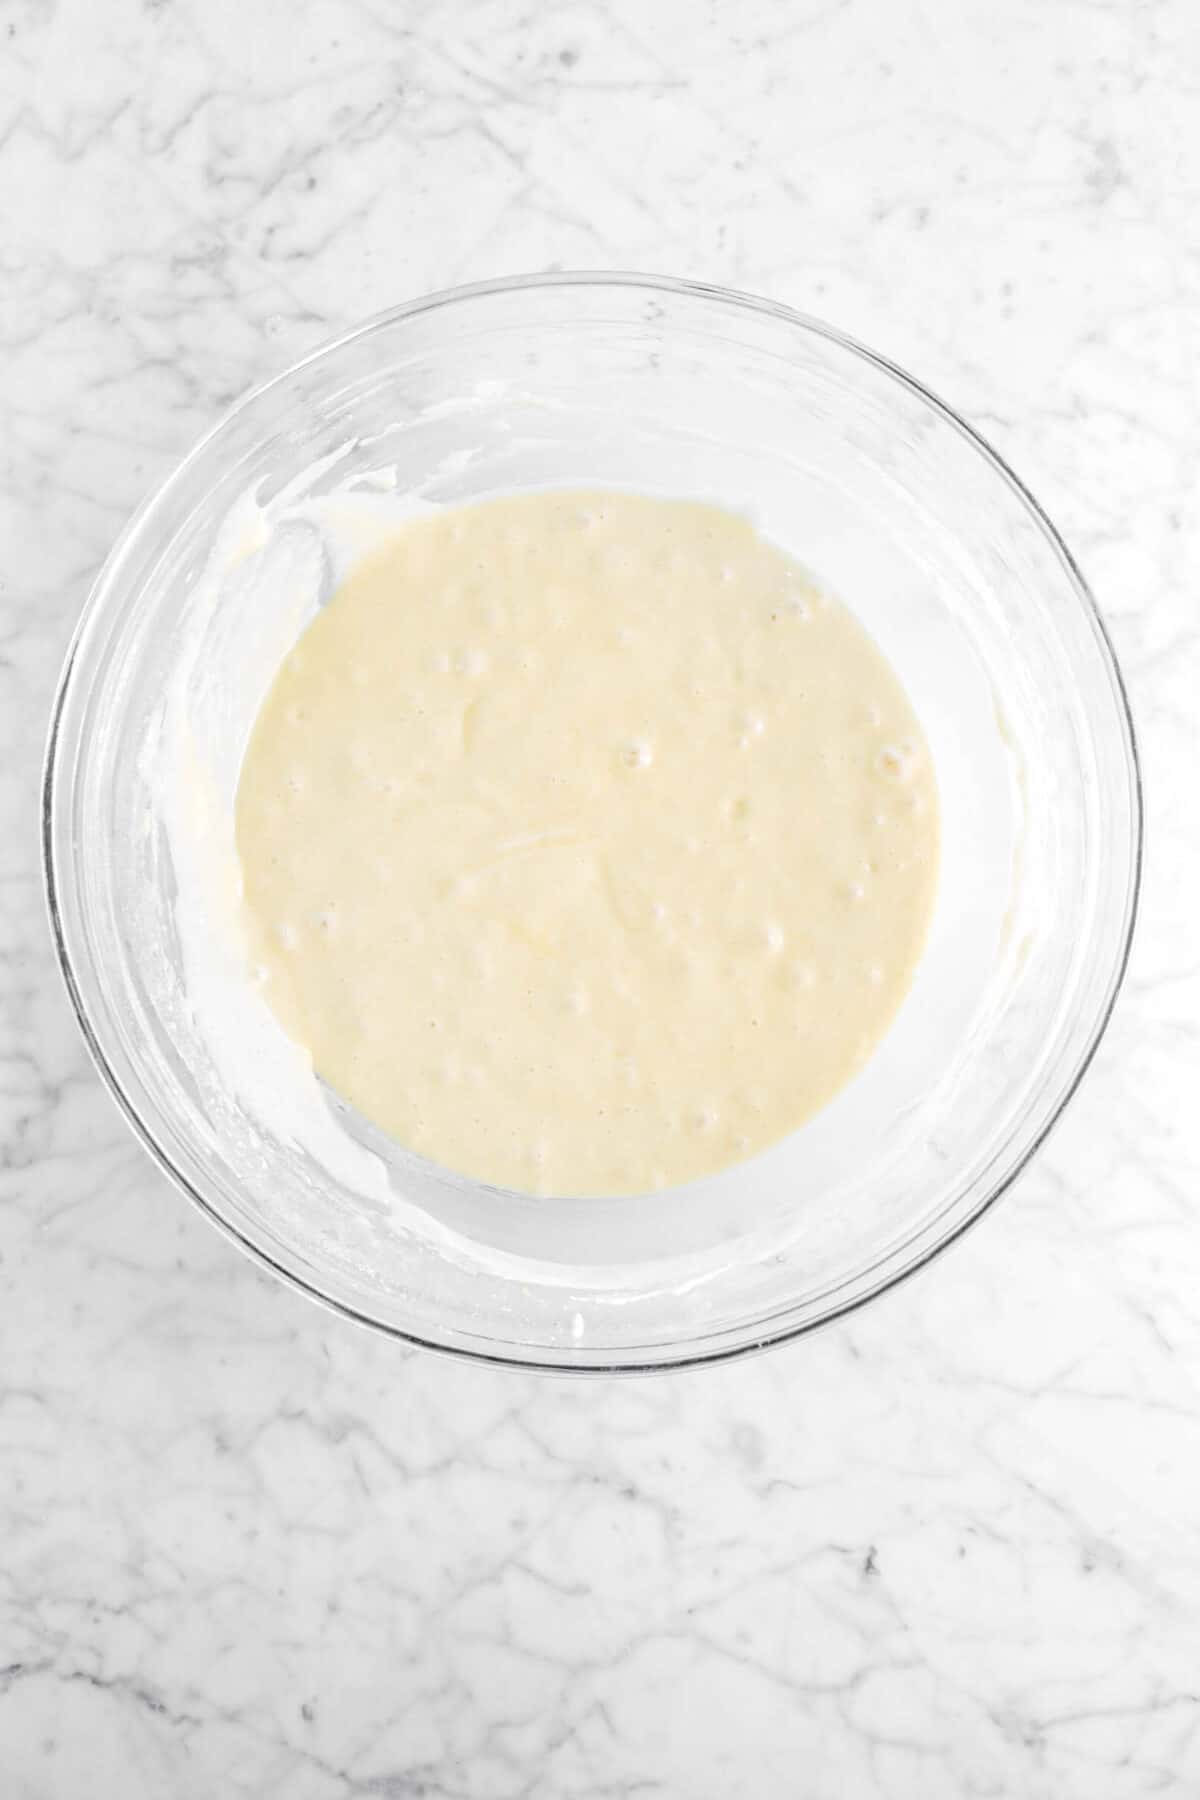 meringue stirred into cupcake batter